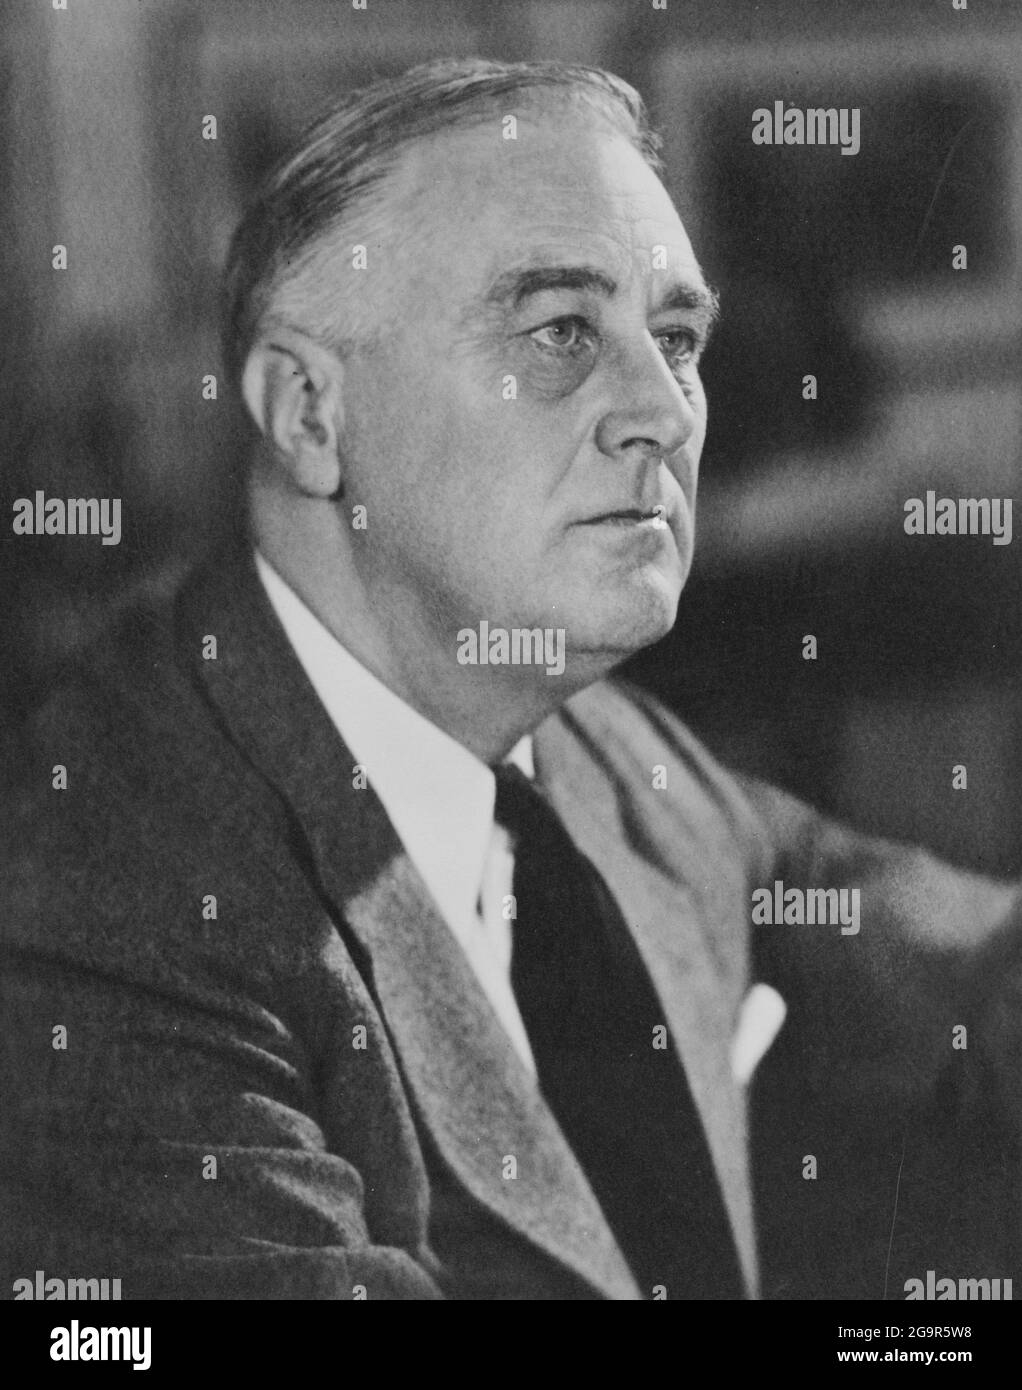 WASHINGTON DC, USA - circa 1941 - Portrait of wartime US President Franklin D Roosevelt - Photo: Geopix Stock Photo